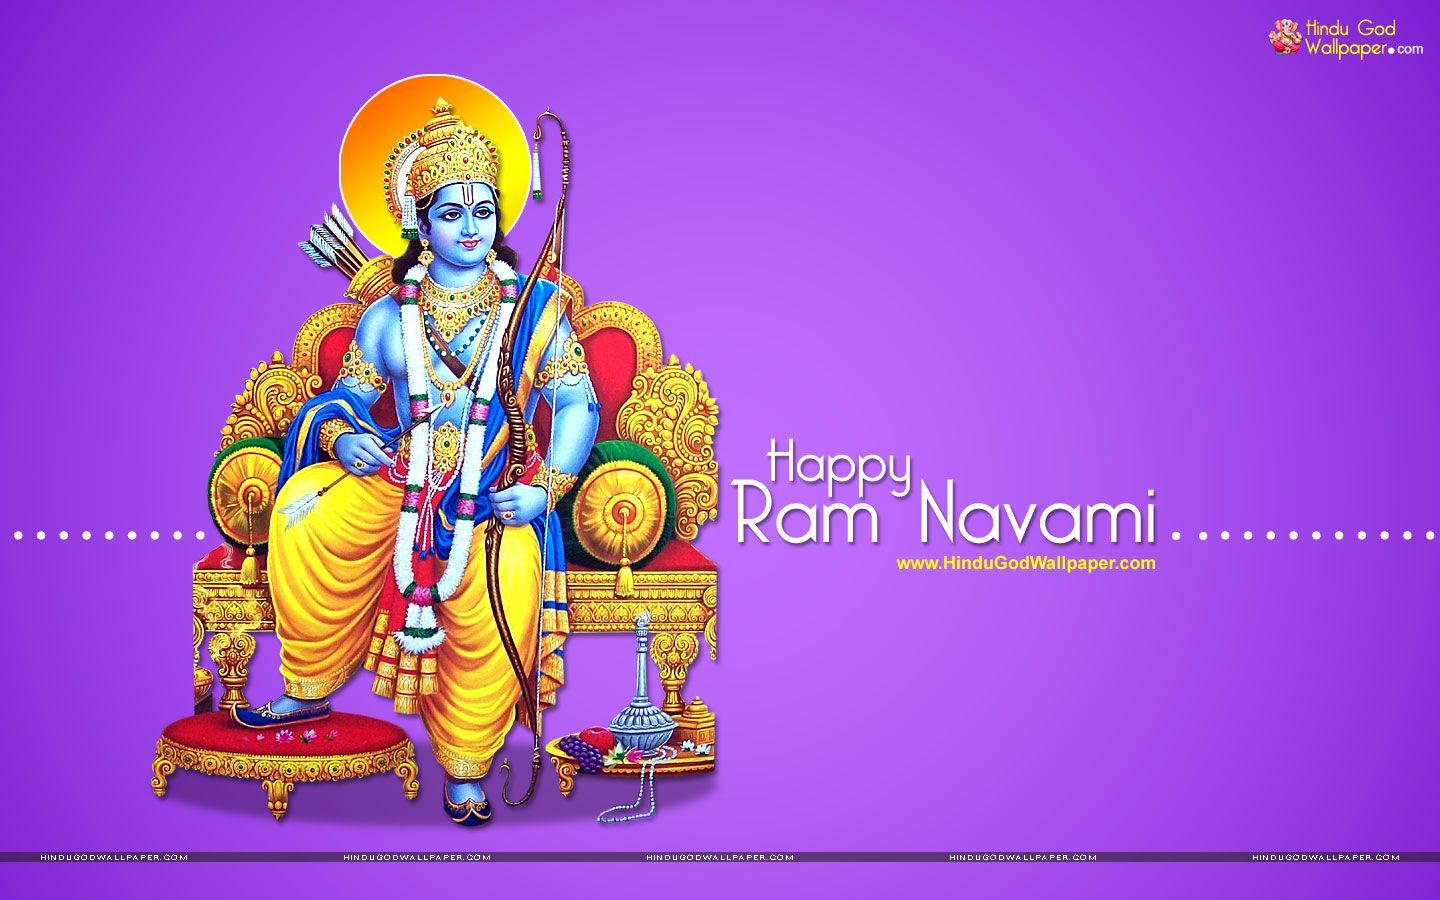 Ram Navami Wallpaper for Desktop Free Download. Ram navami